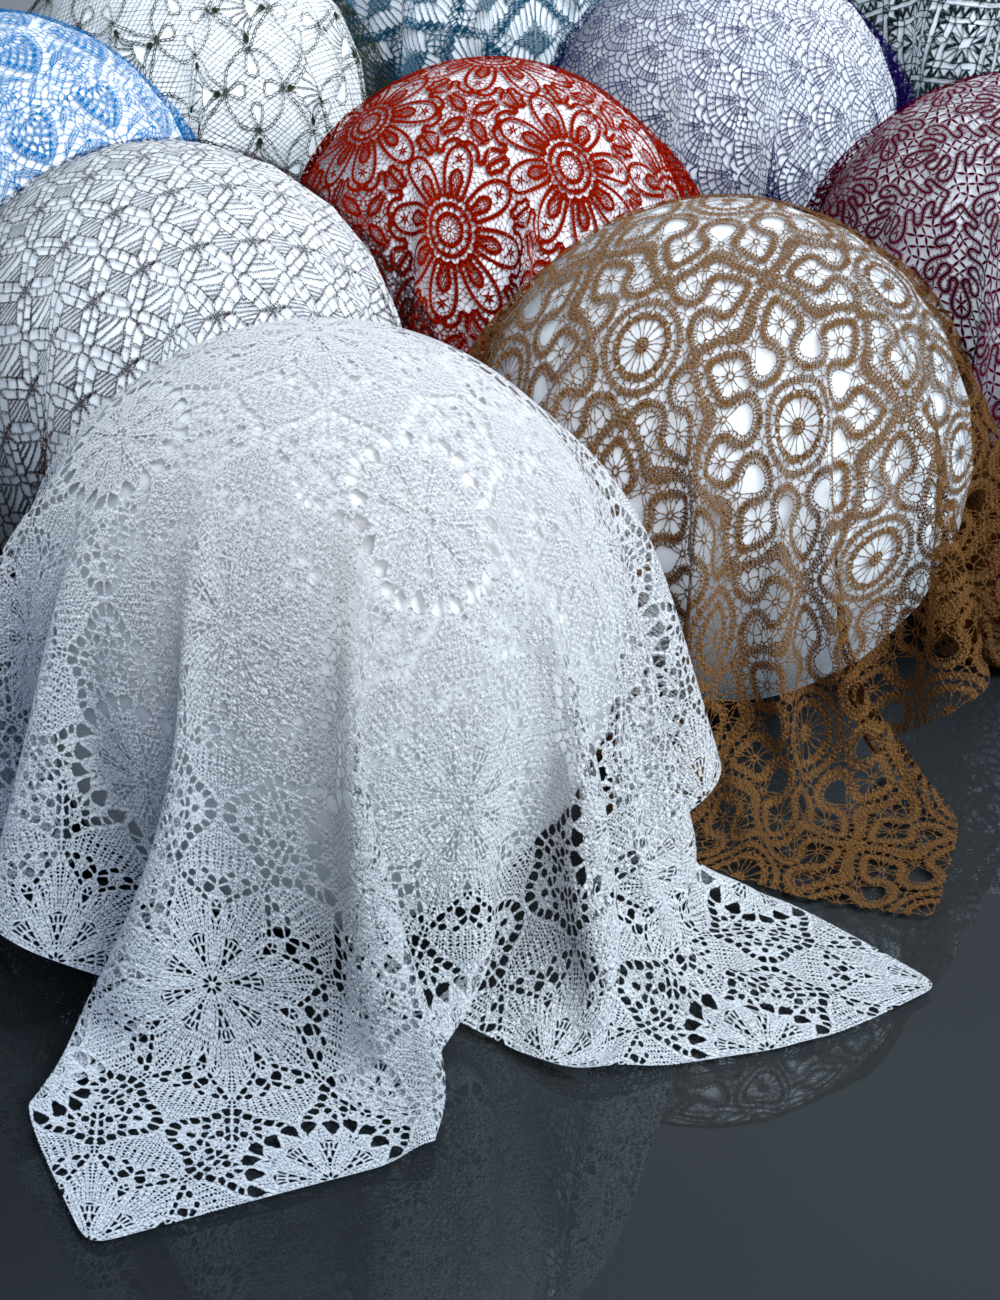 Crochet Shaders by: Atenais, 3D Models by Daz 3D